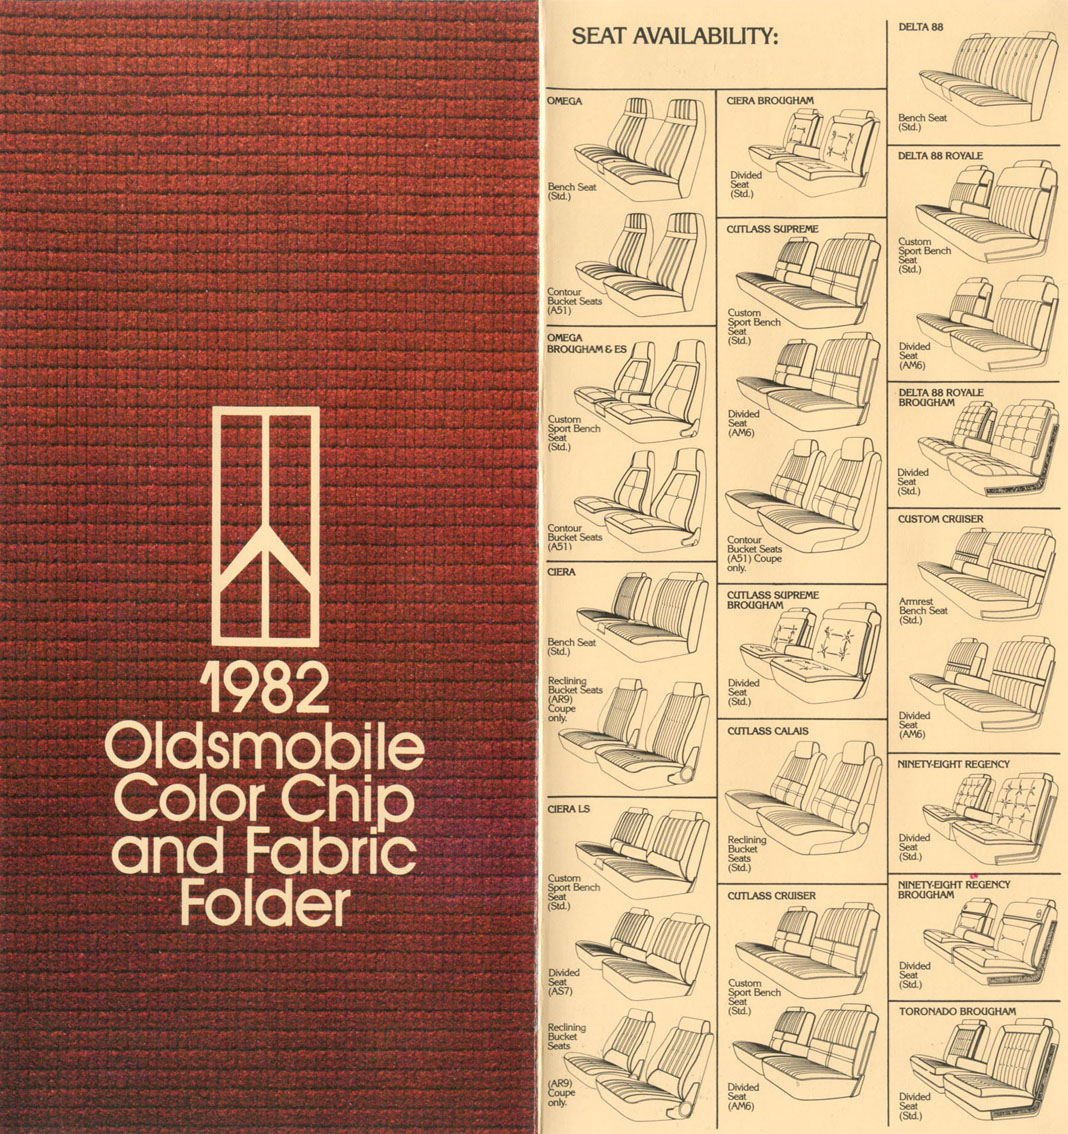 n_1982 Oldsmobile Colors and Fabrics Folder-01.jpg